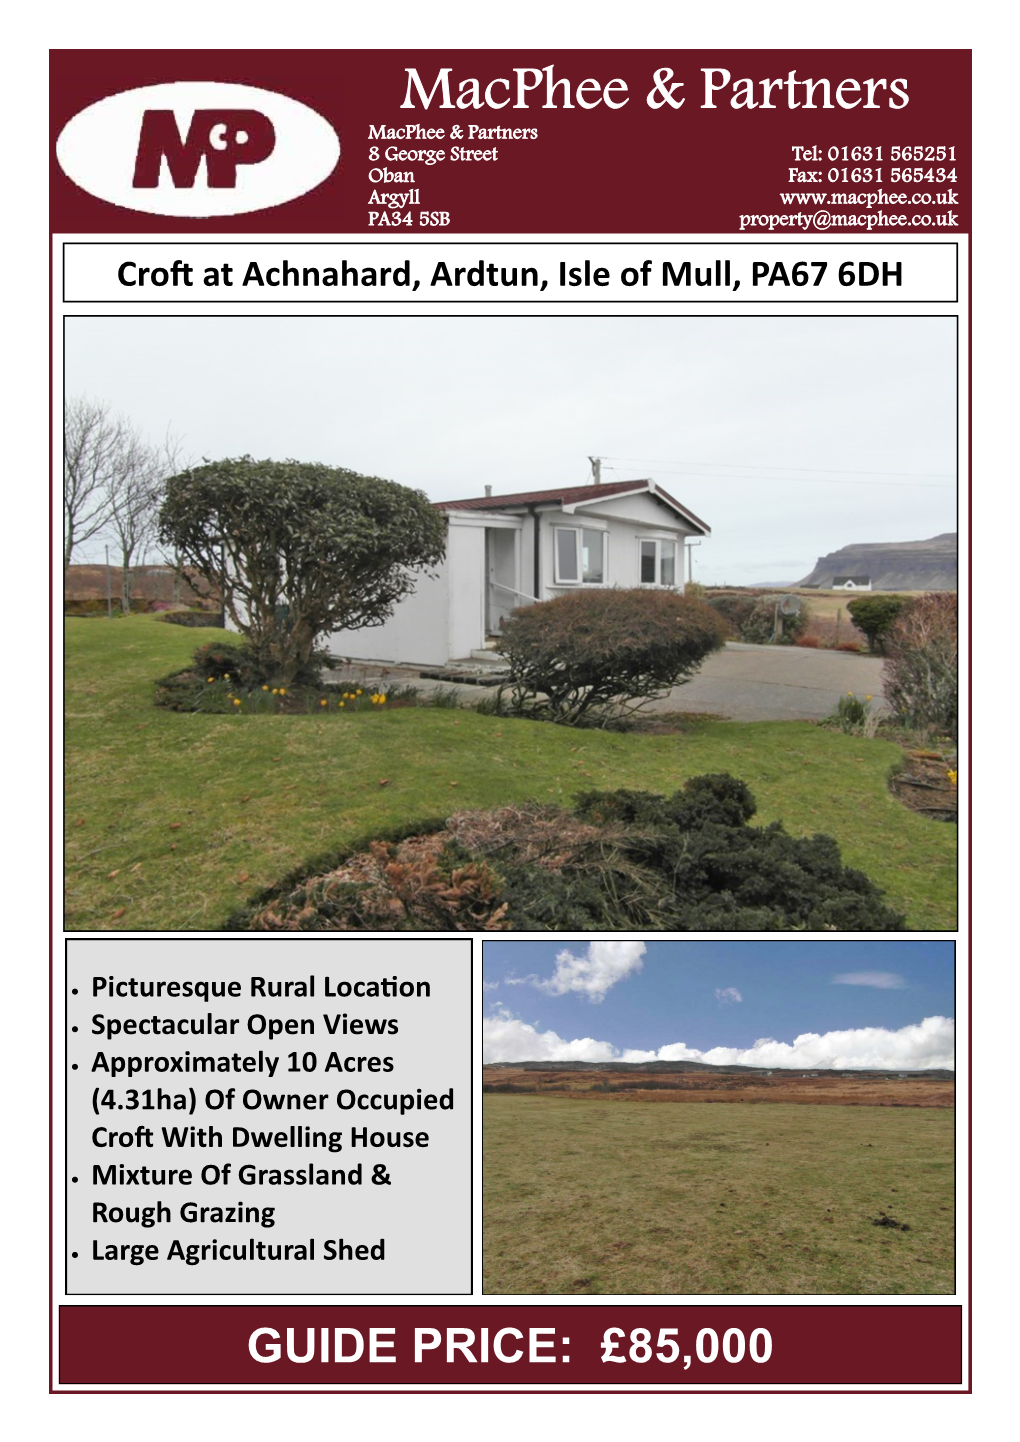 Croft at Achnahard, Ardtun, Isle of Mull, PA67 6DH